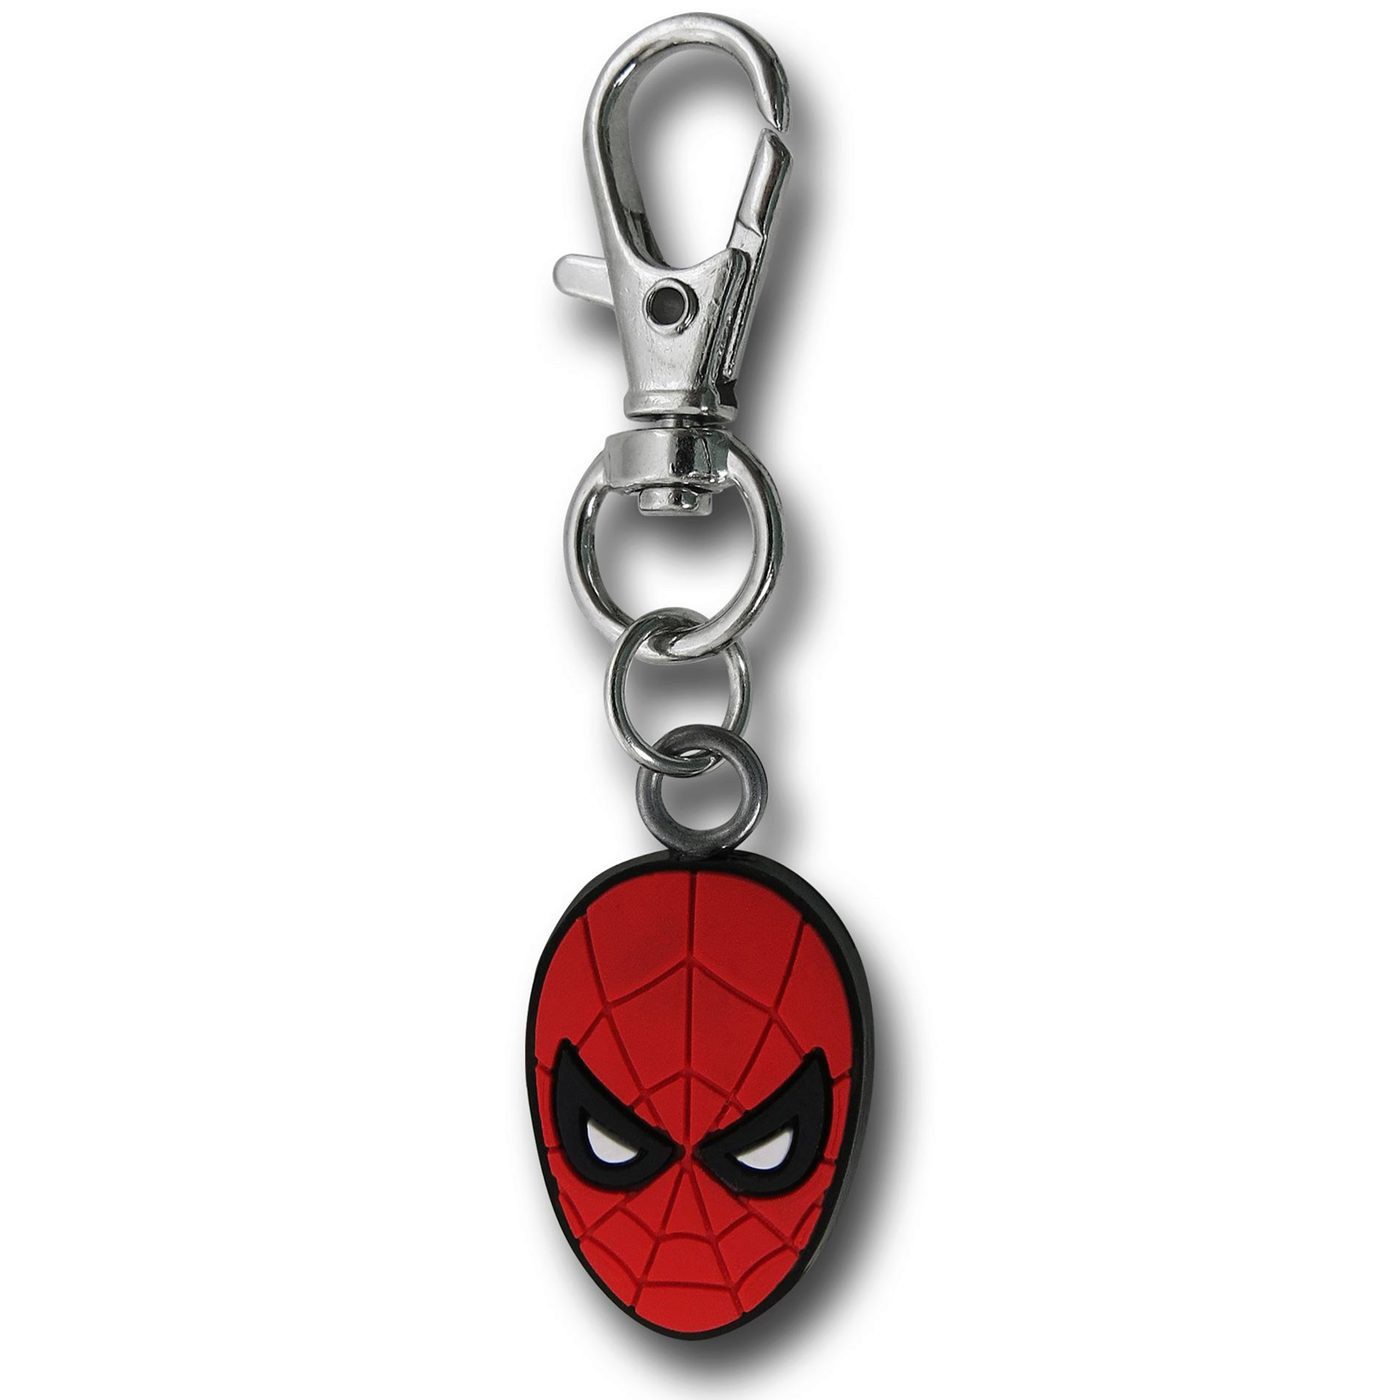 Spiderman Head Zipper Pull - image 1 of 2